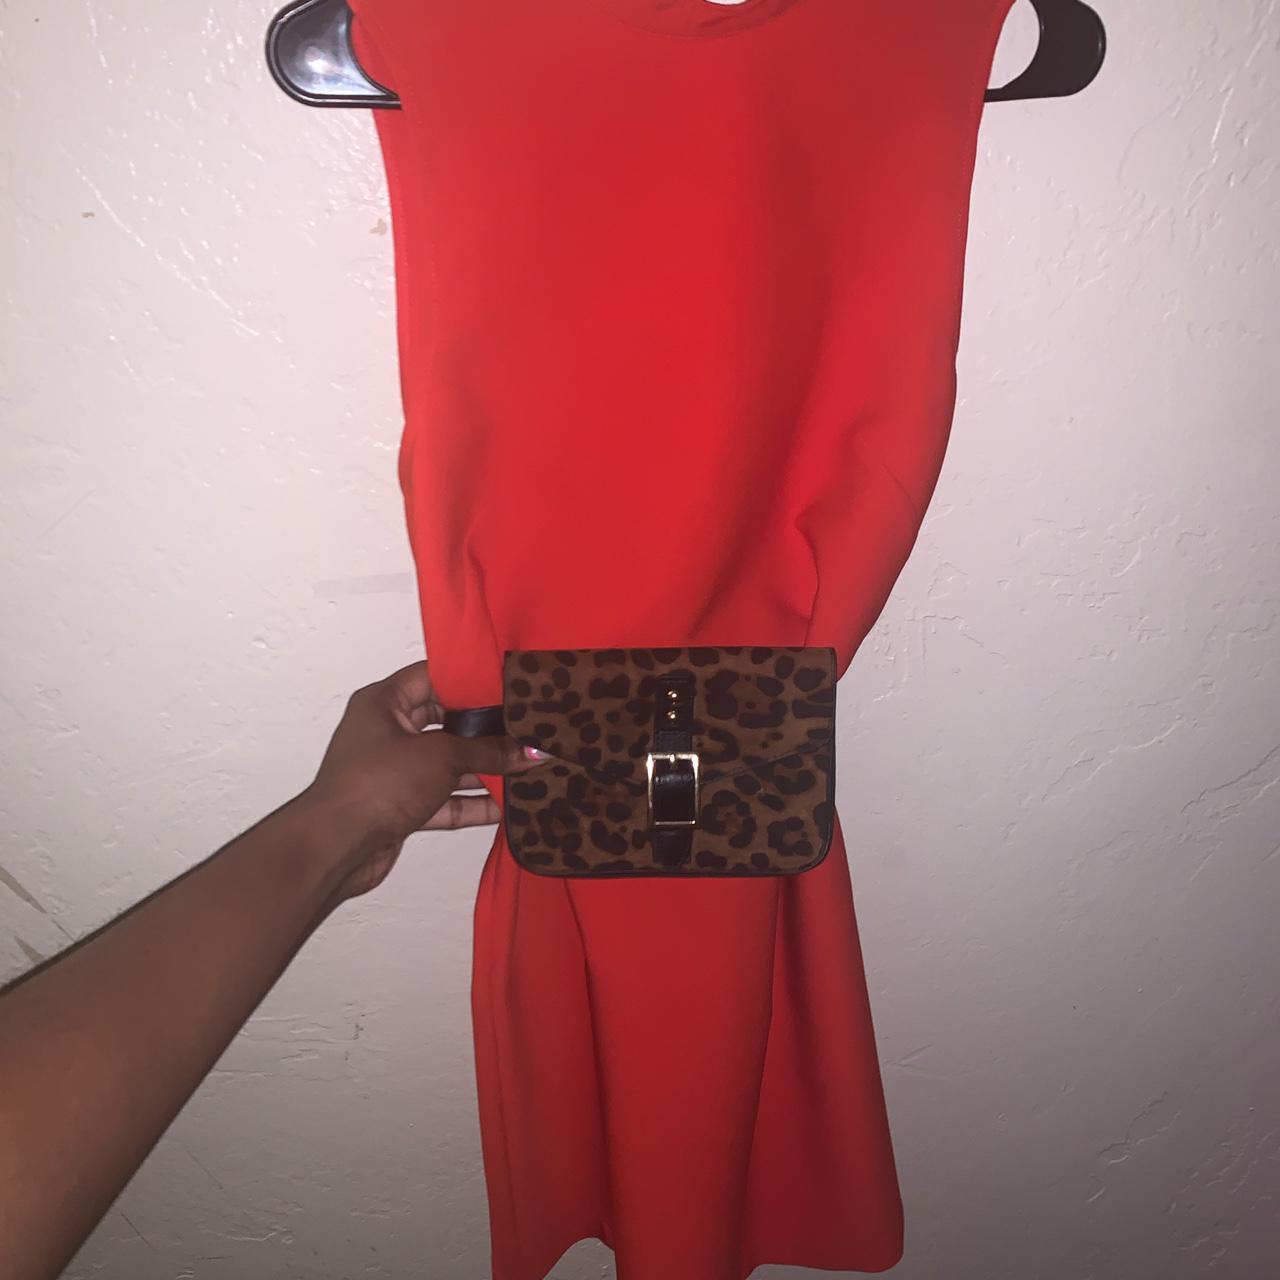 Product Image 4 - 2 Red dress

Bundle dress deal
Taylor